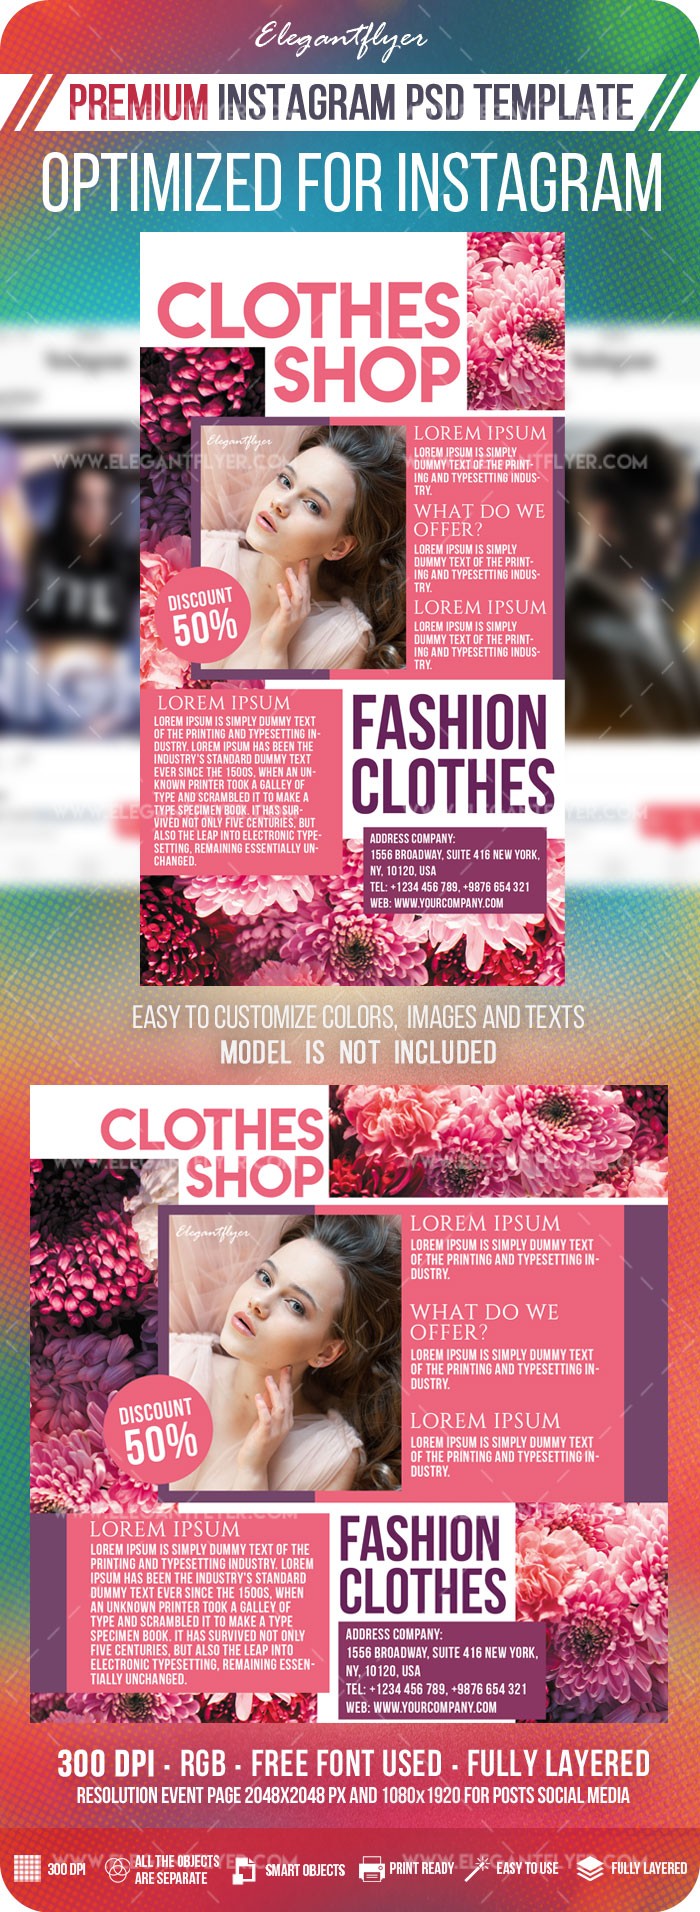 Loja de roupas Instagram by ElegantFlyer